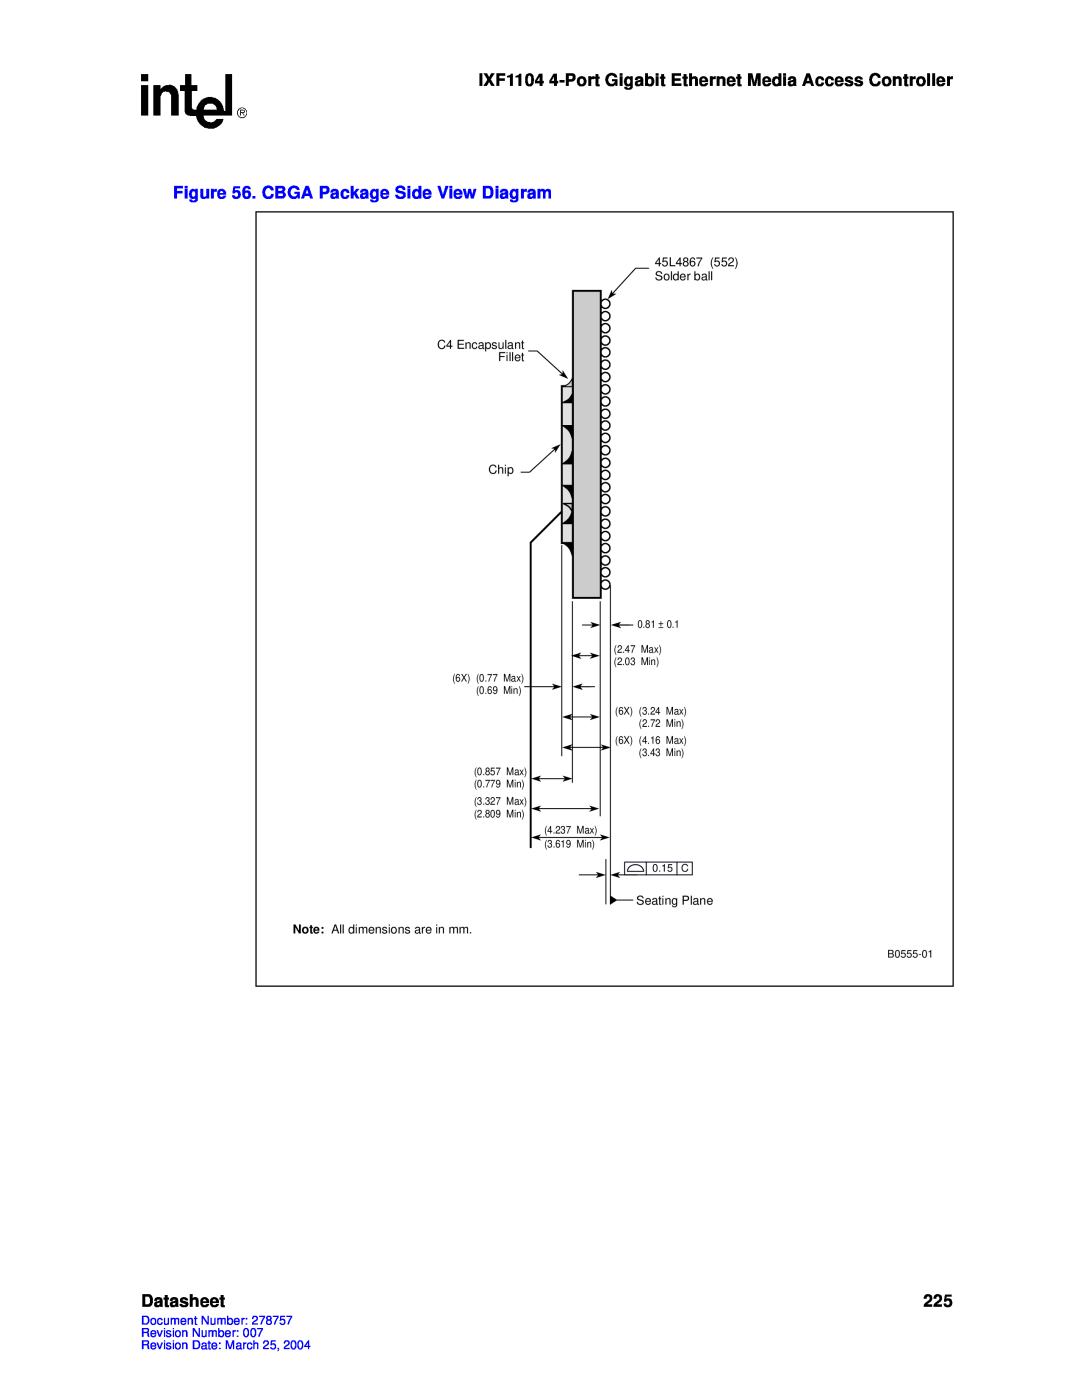 Intel IXF1104 manual CBGA Package Side View Diagram, Datasheet 